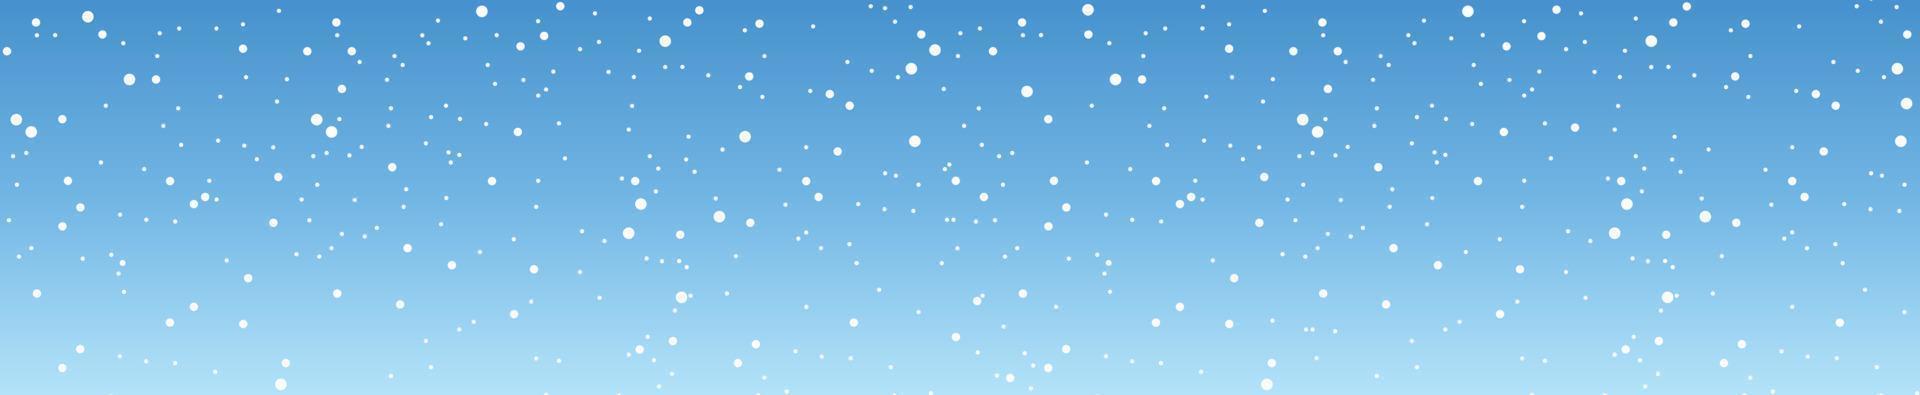 snöflingor och vinterbakgrund, vinterlandskap, horisontell banner, vektorillustration. vektor